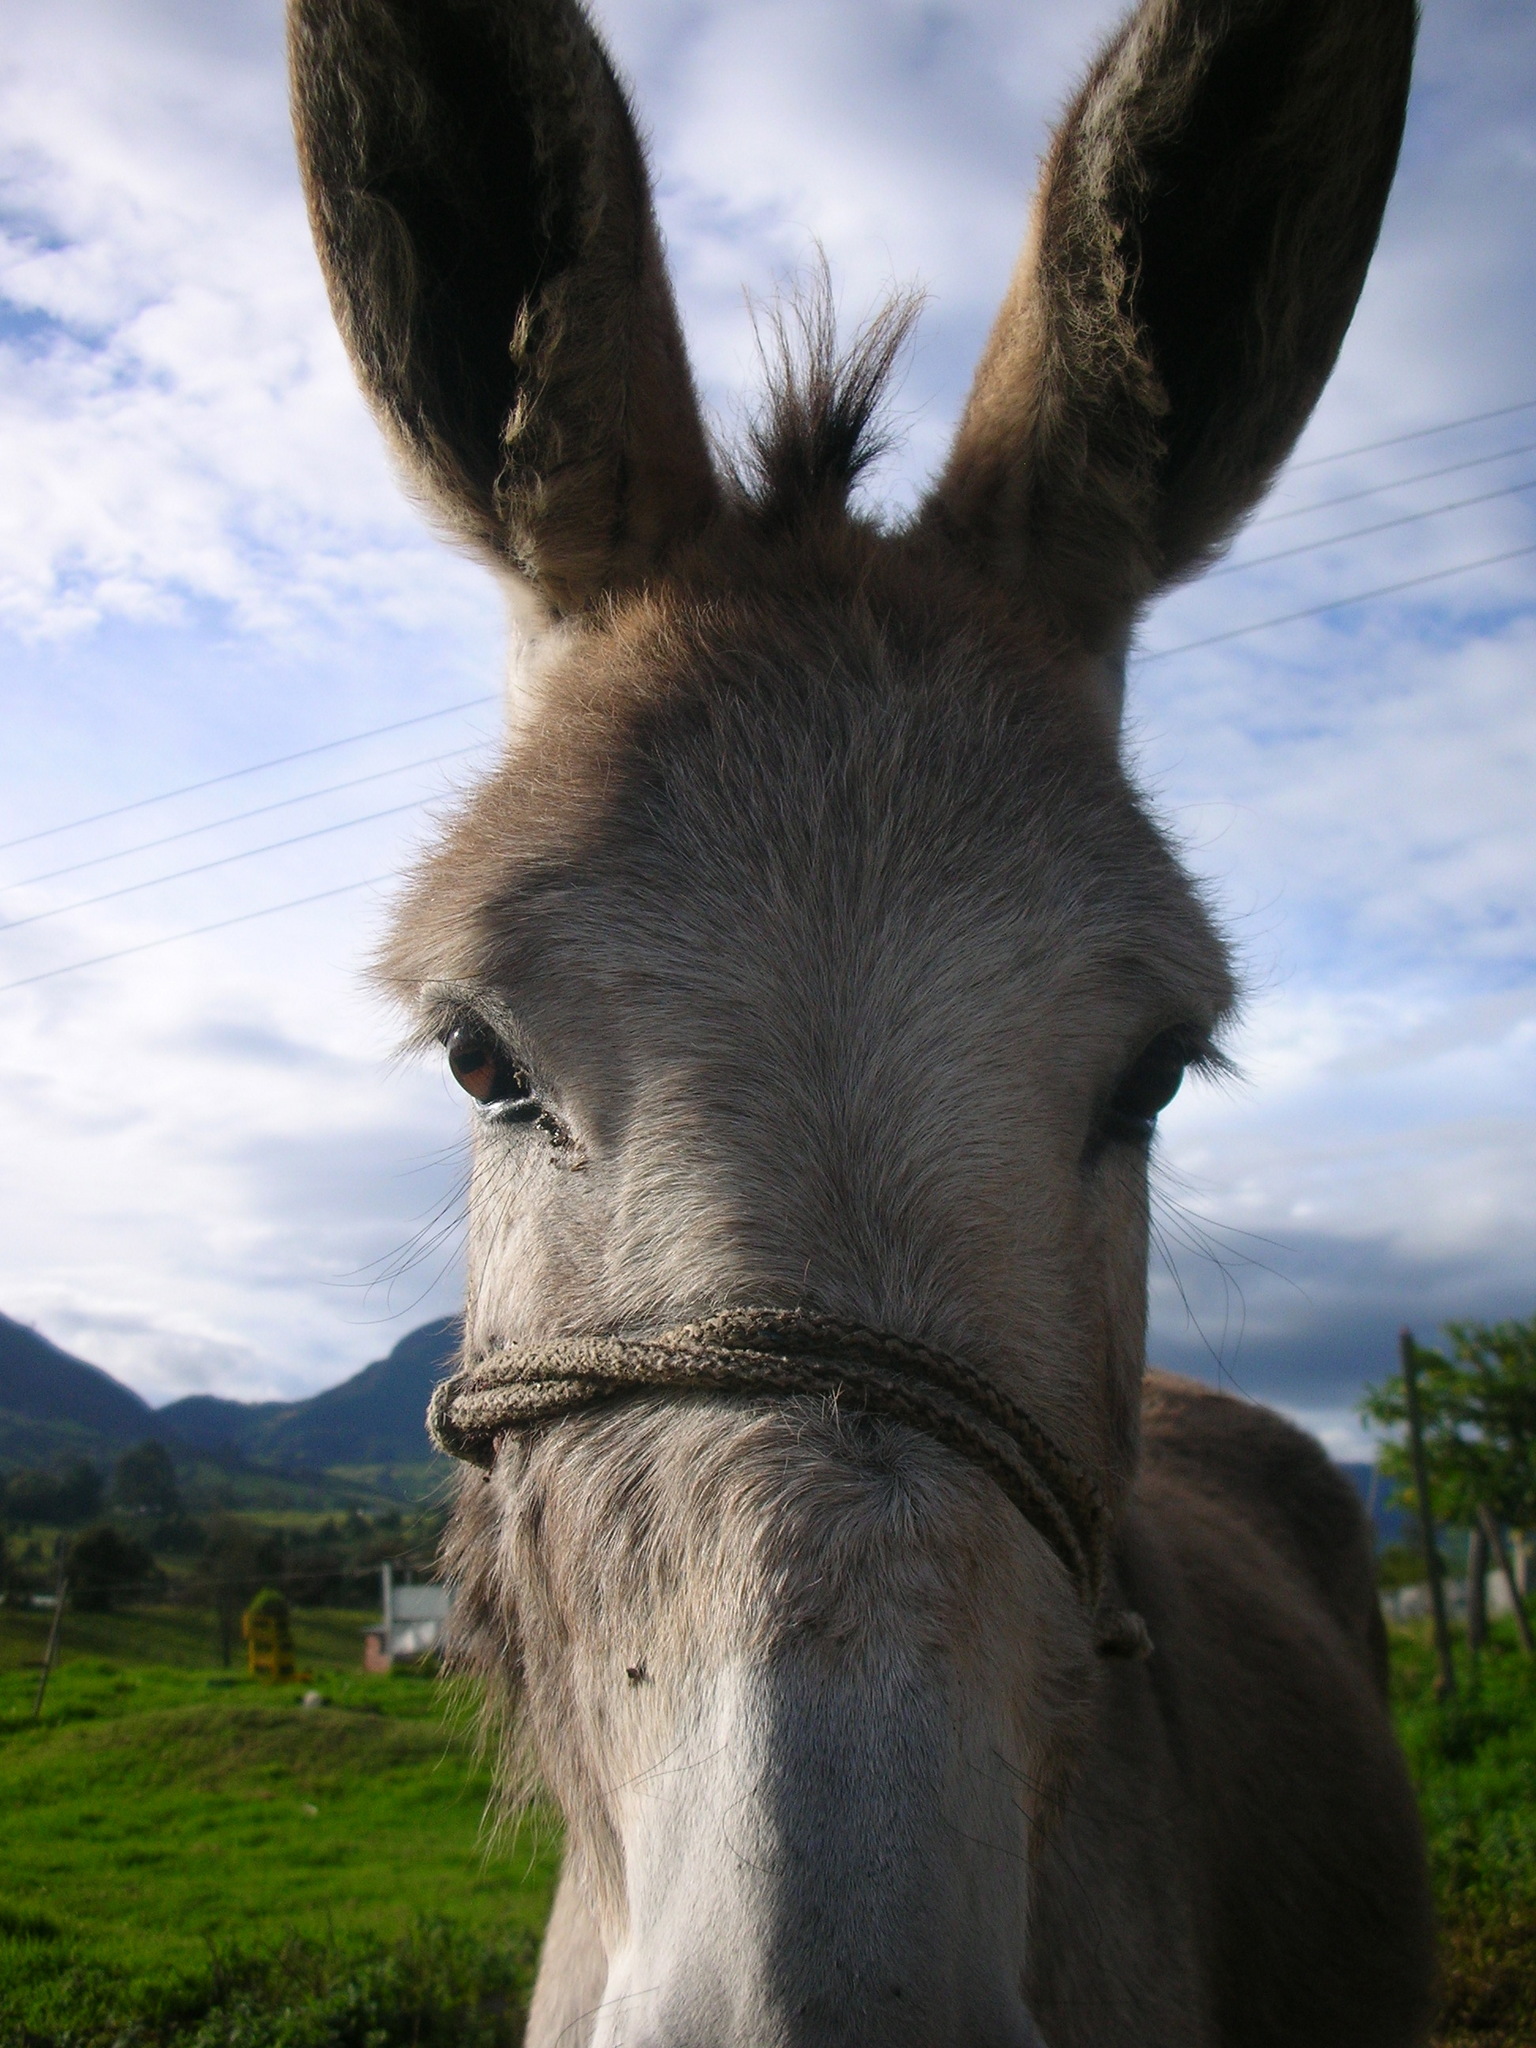 donkeyface.jpg